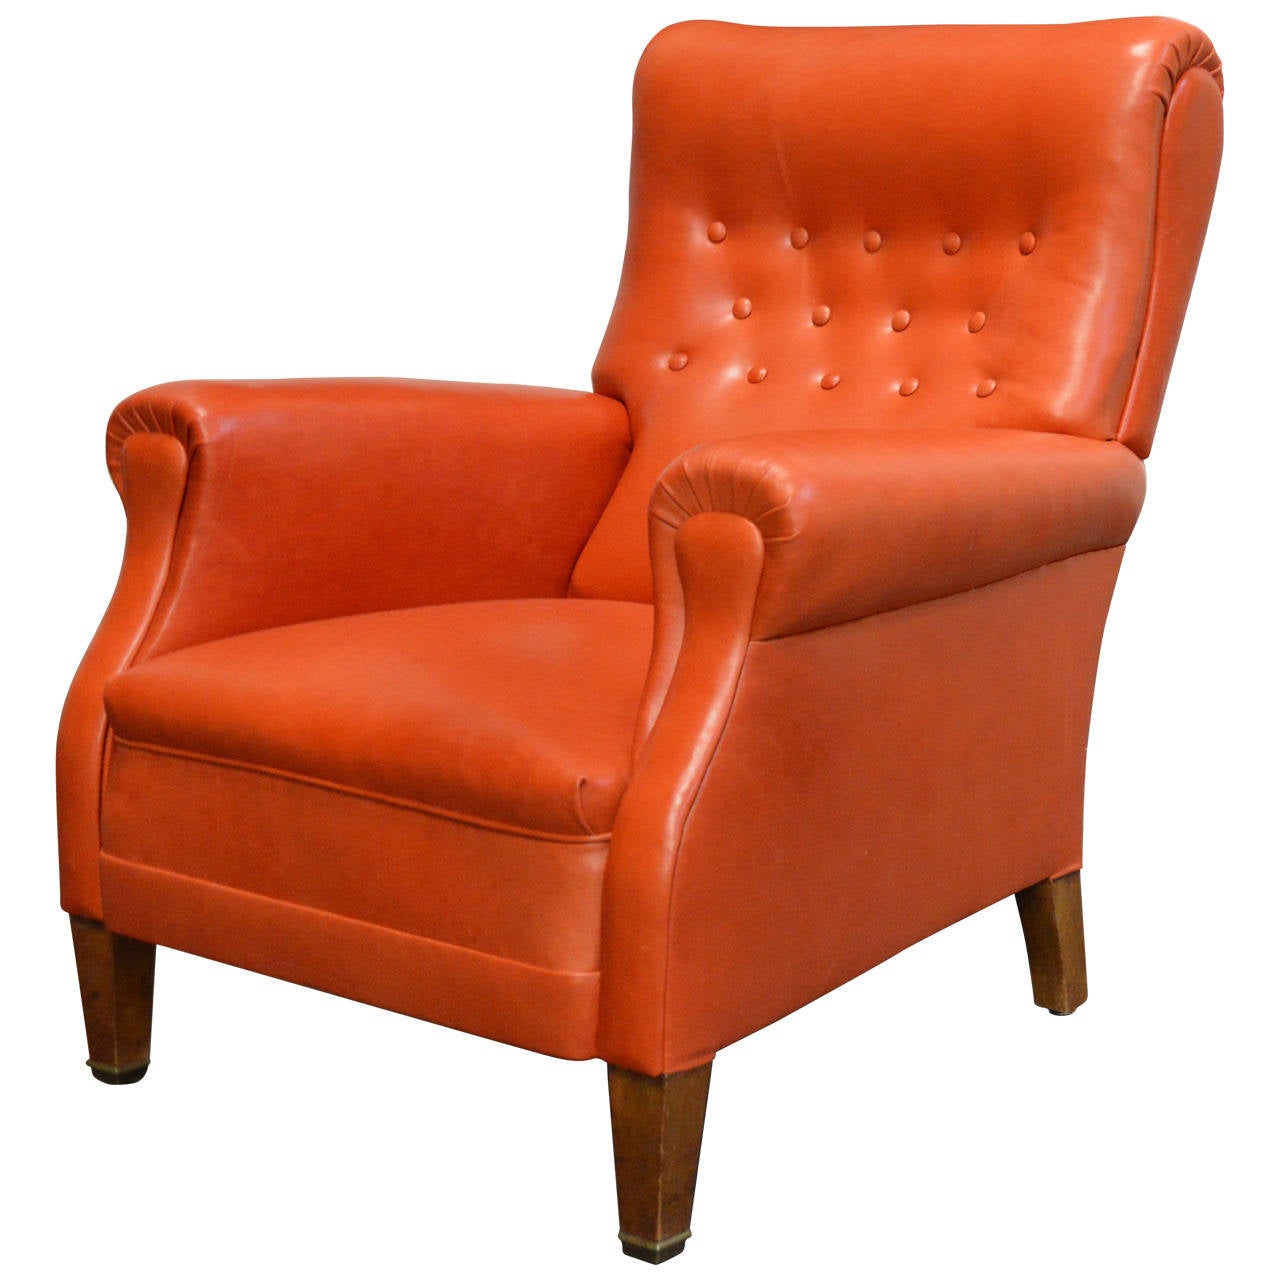 Vintage Swedish Orange Leather Lounge Chair at 1stdibs